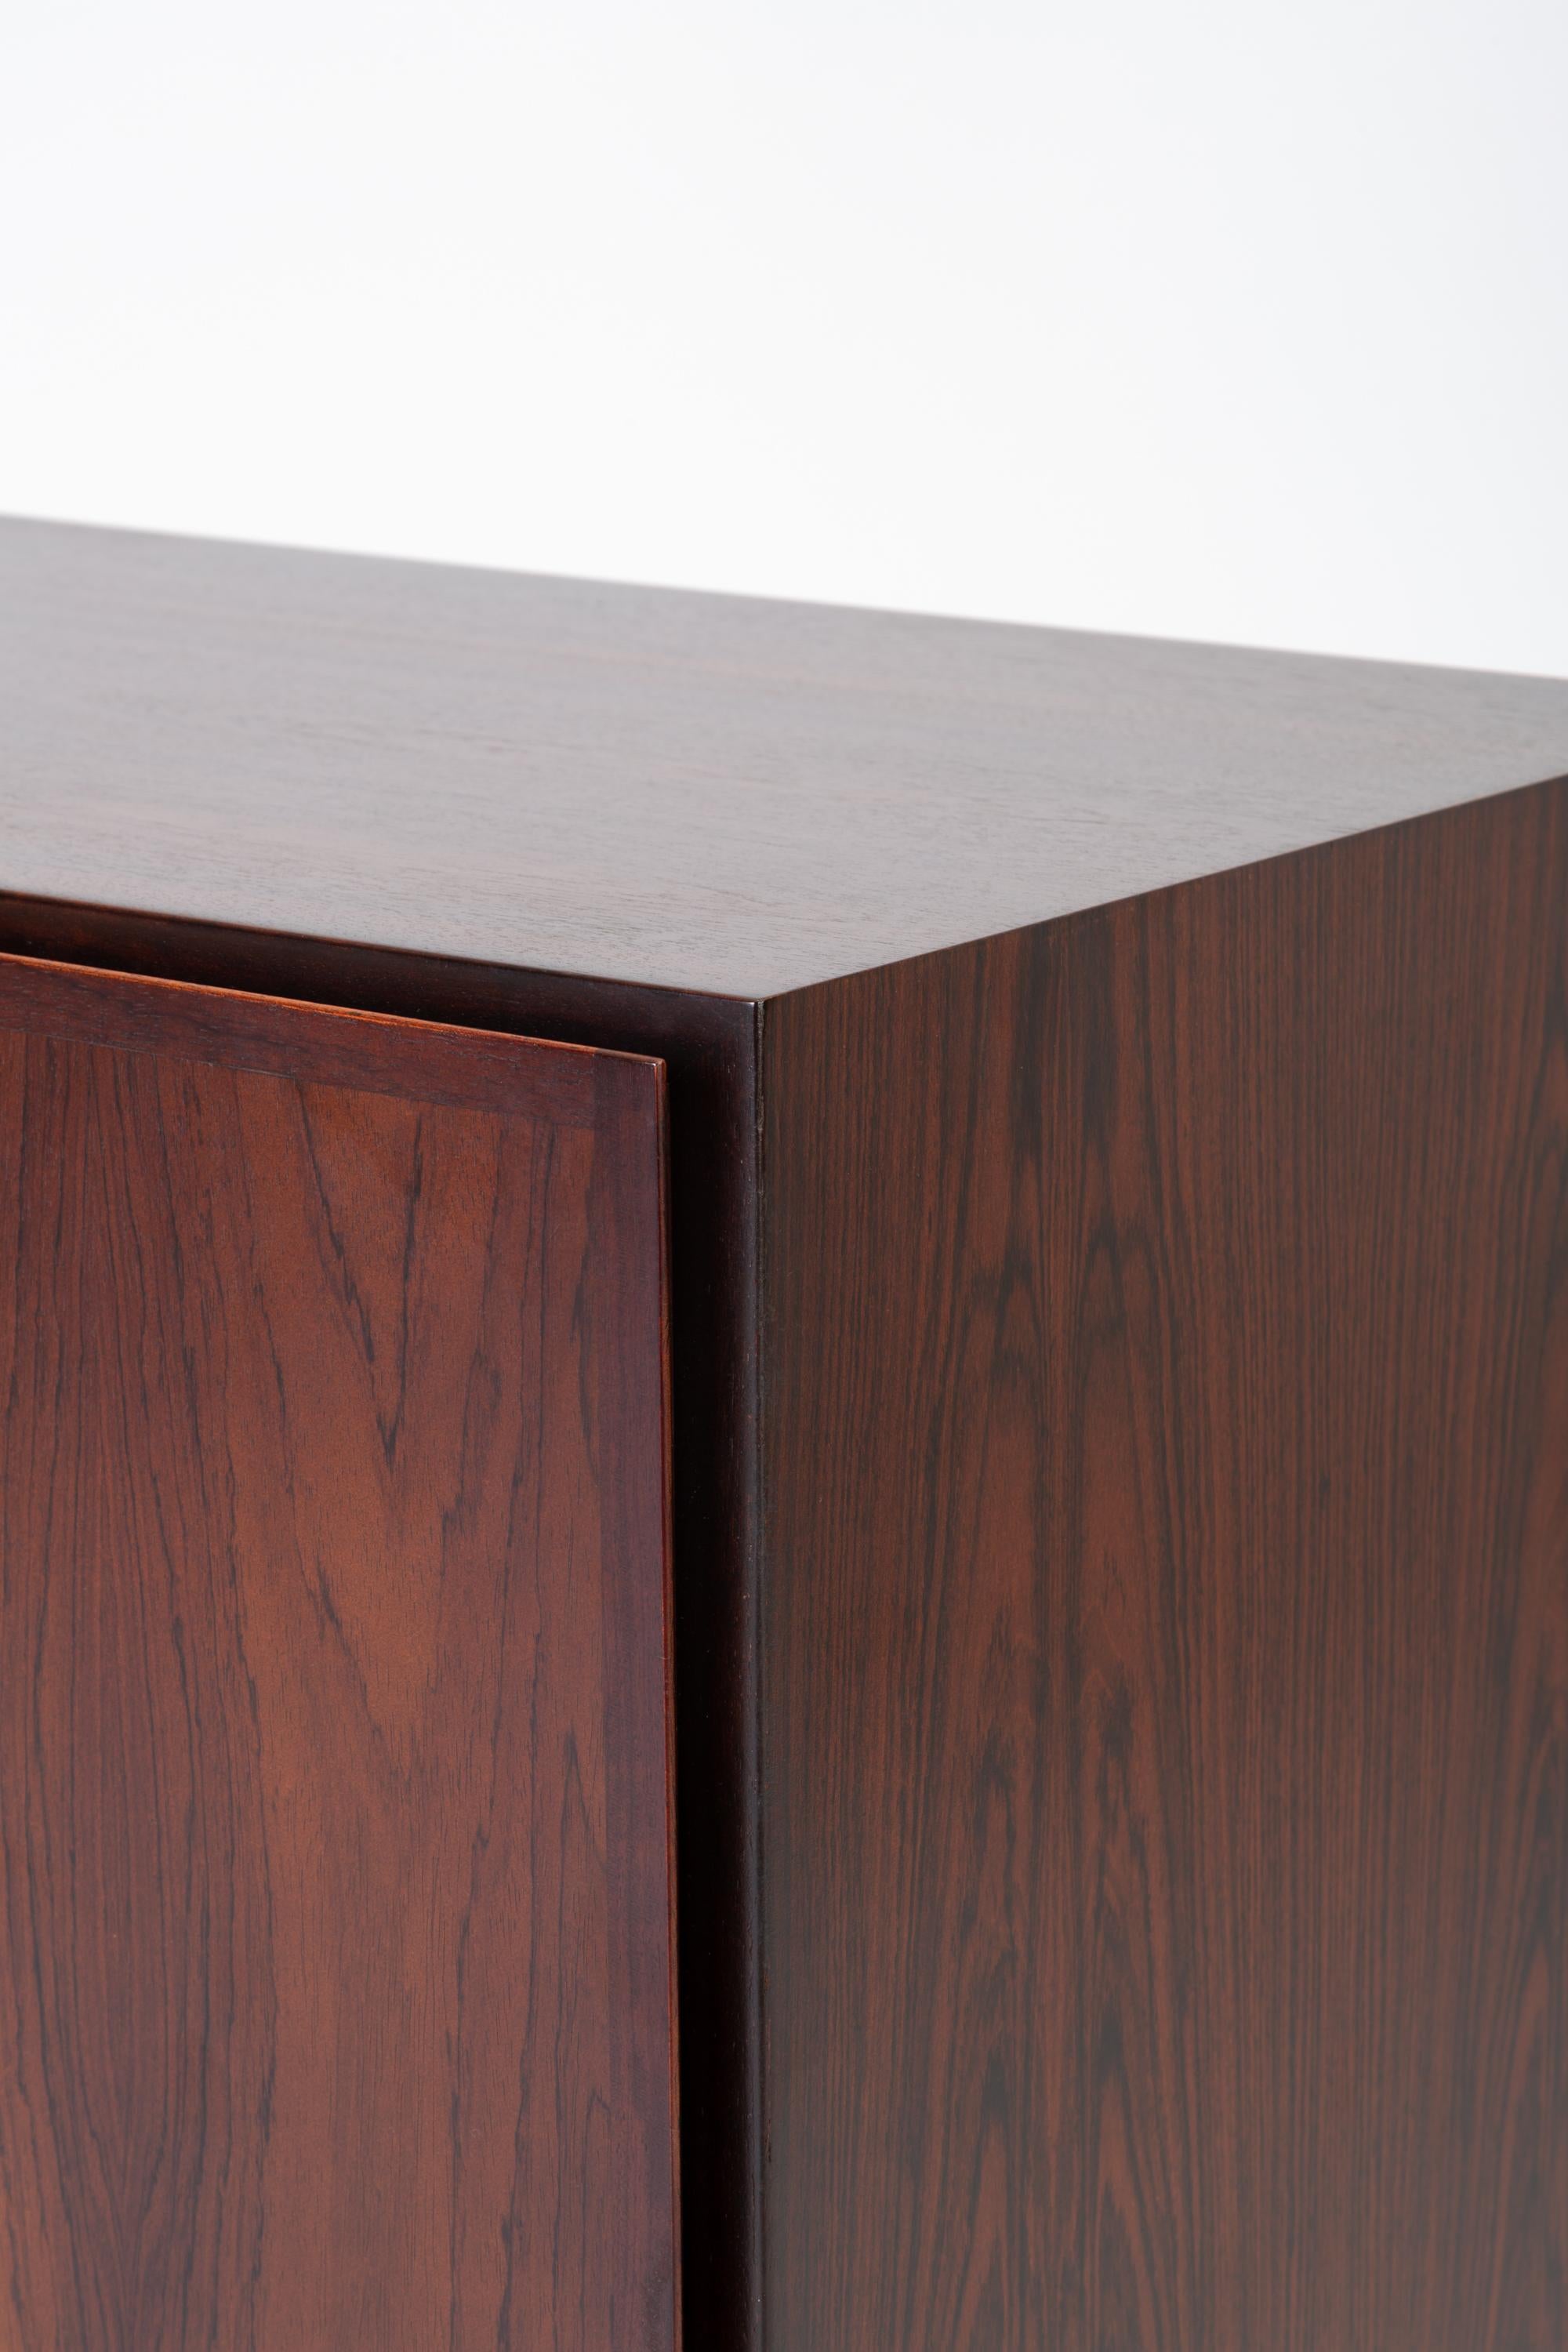 Small Danish Modern Rosewood Cabinet by Omann Jun 7